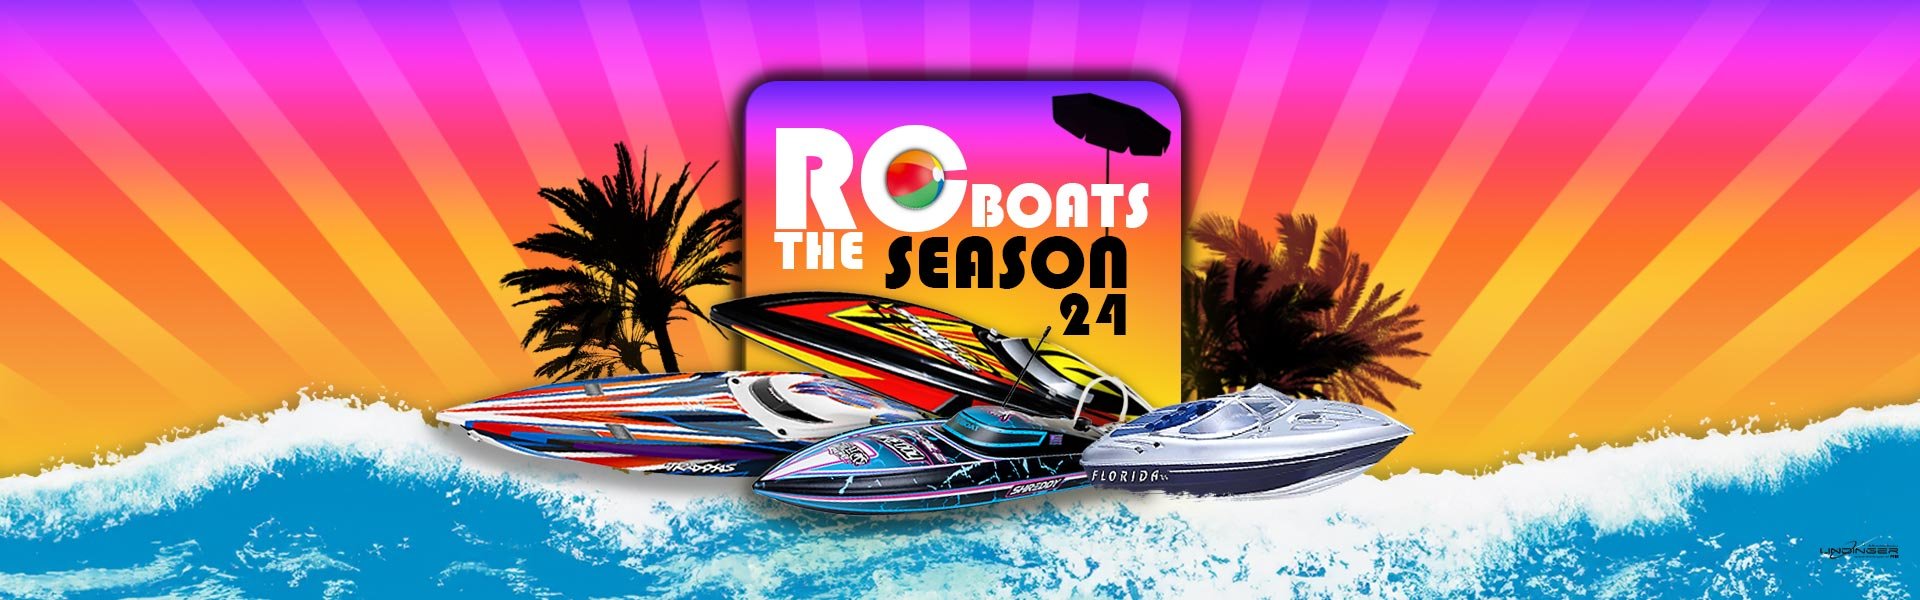 RC Boot Season 2024 Racing Boats and RC Ships